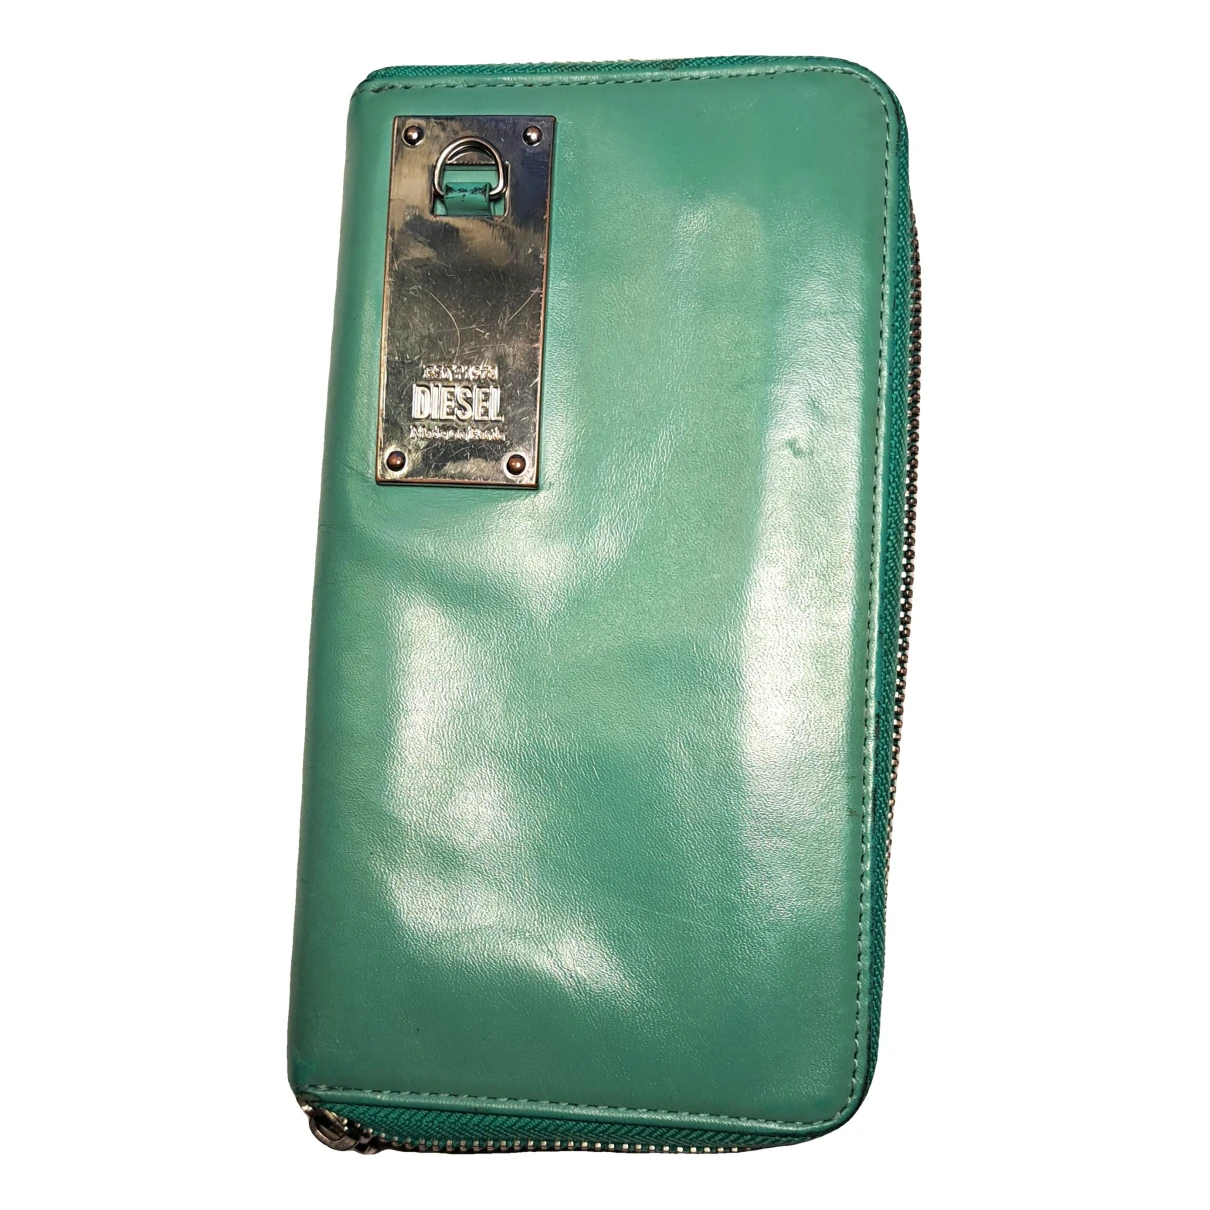 Pre-owned Diesel Leather Clutch Bag In Green